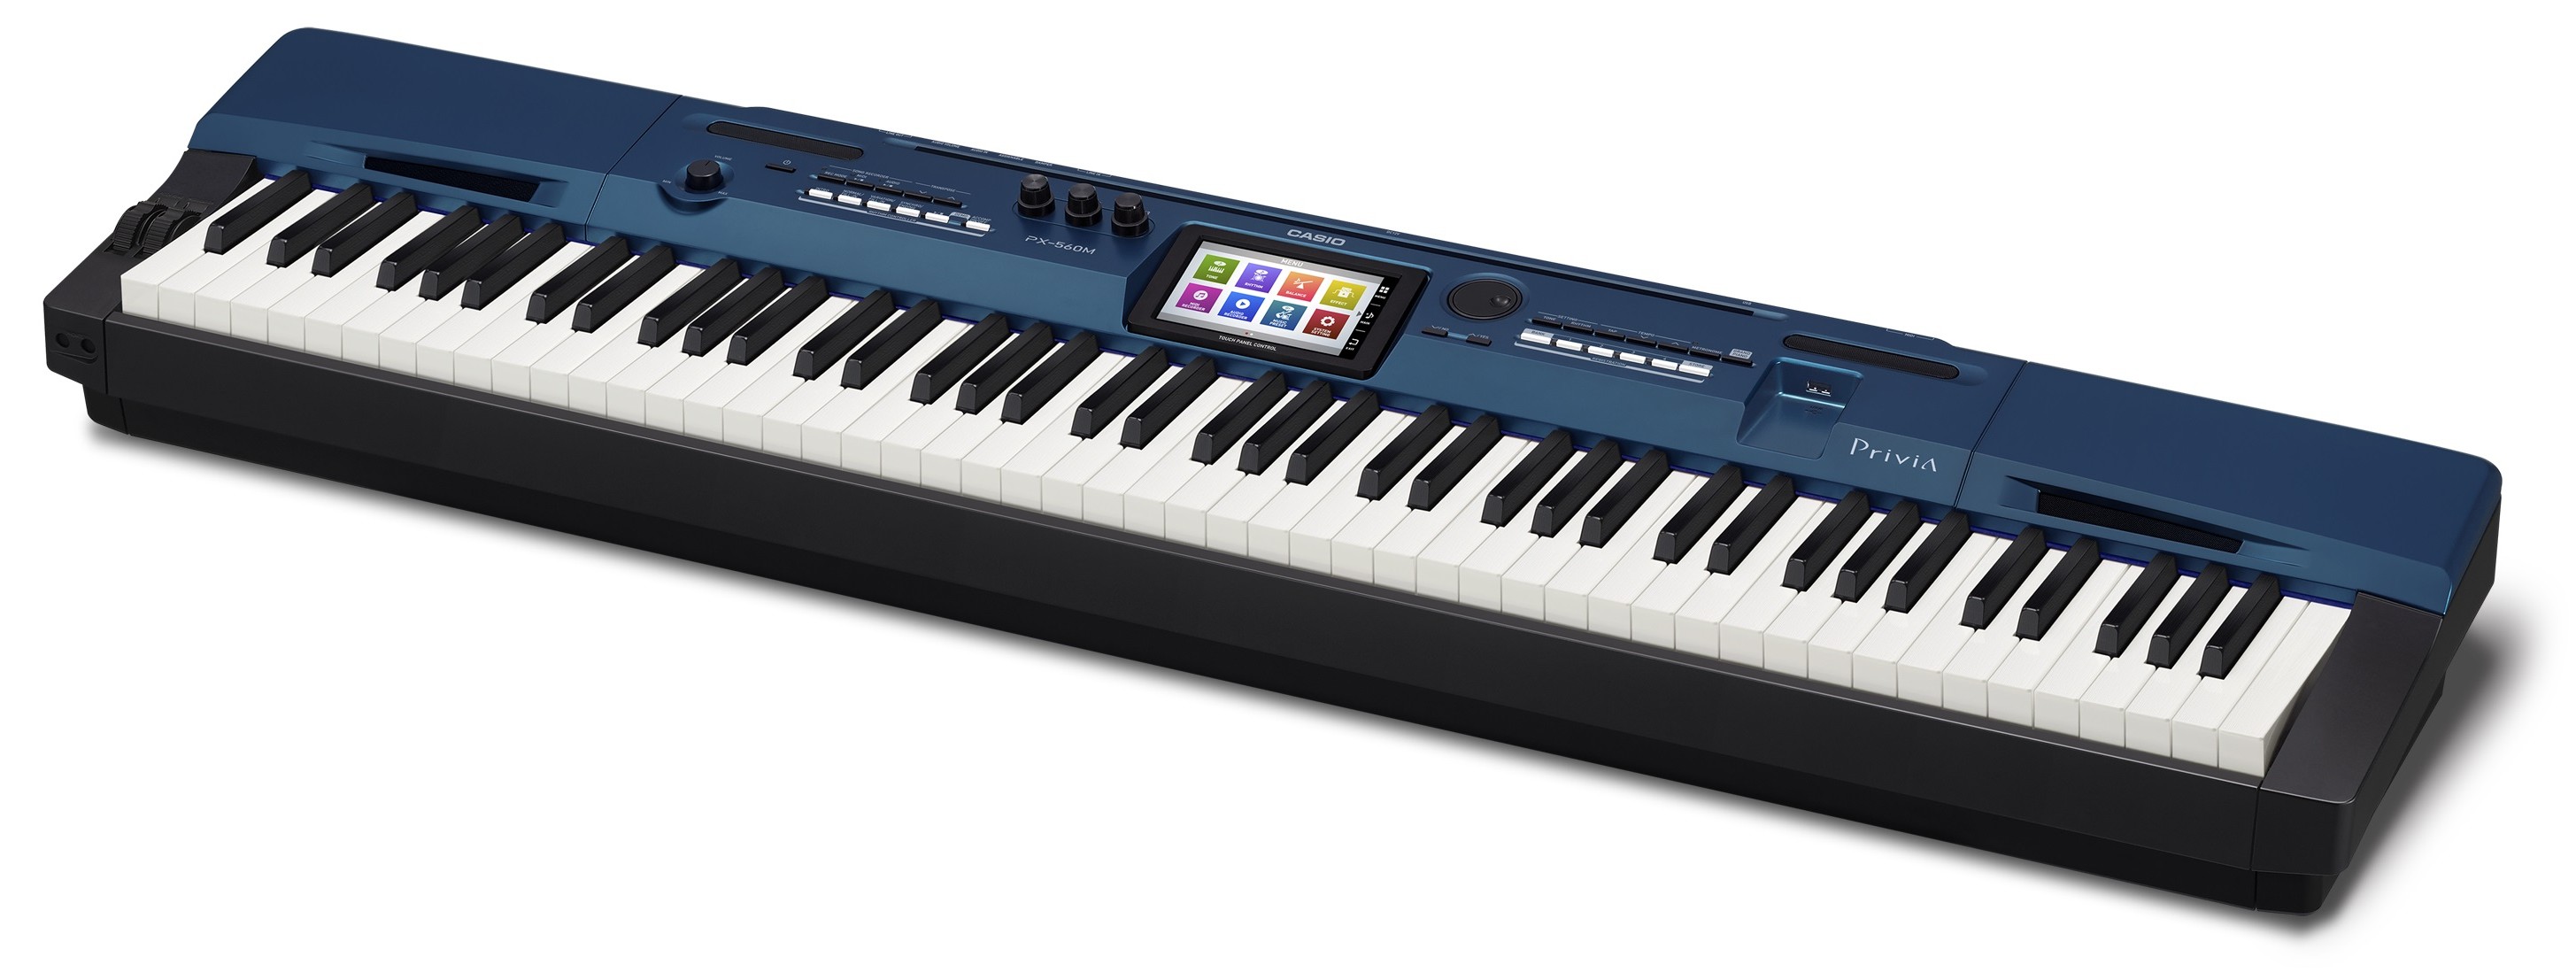 New Casio Privia Digital Piano A Synth In Disguise – Synthtopia